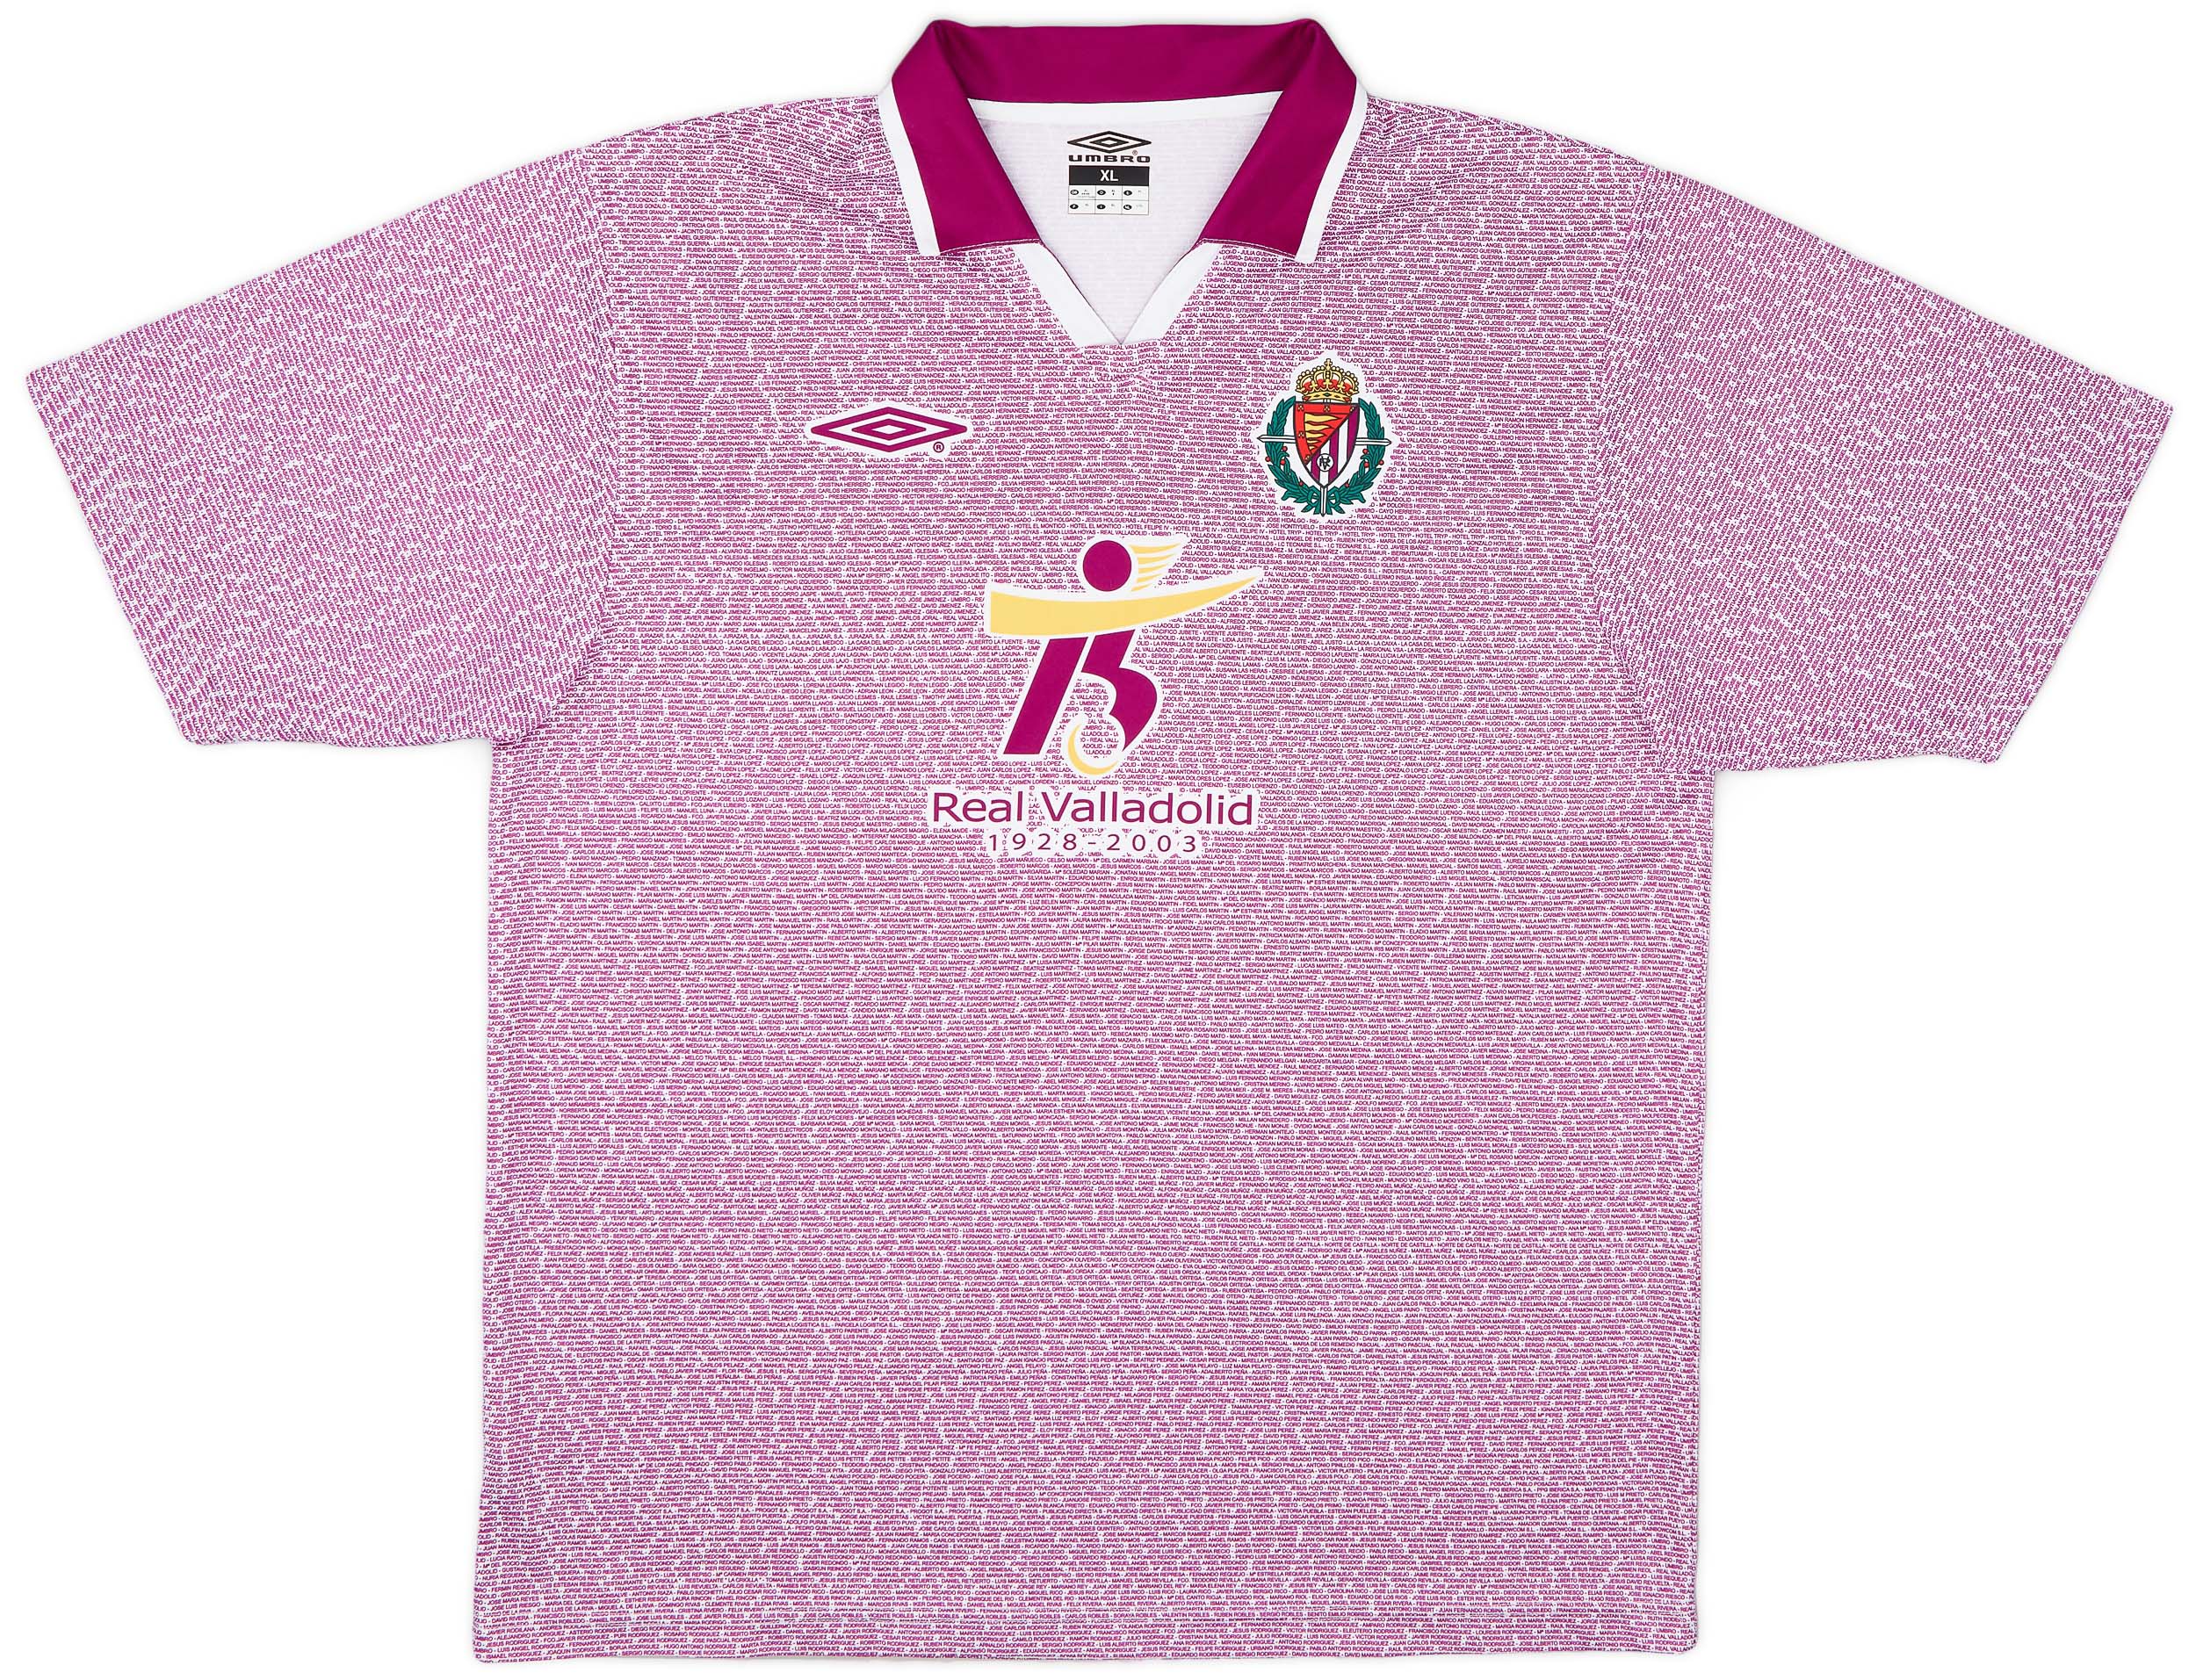 2003 Real Valladolid '75th Anniversary' Shirt - 10/10 - ()